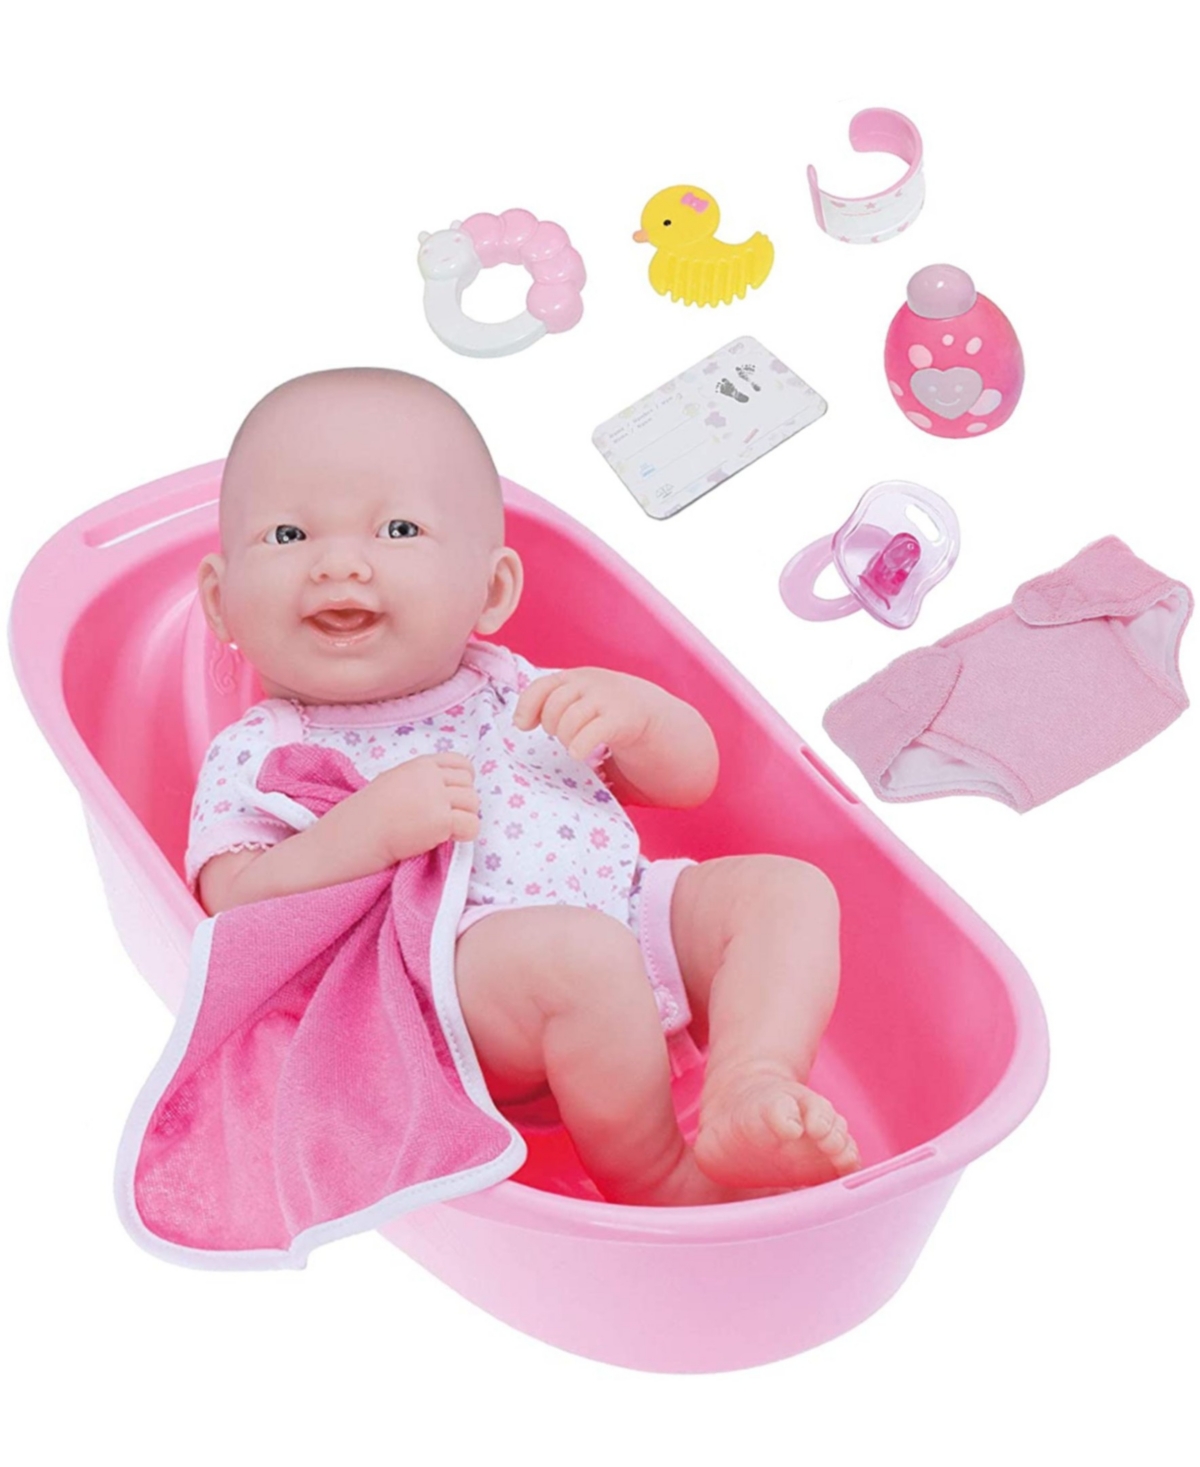 Jc Toys La Newborn 14" Smiling Baby Doll 8 Piece Bathtub Gift Set In Deluxe Bath Set - Pink